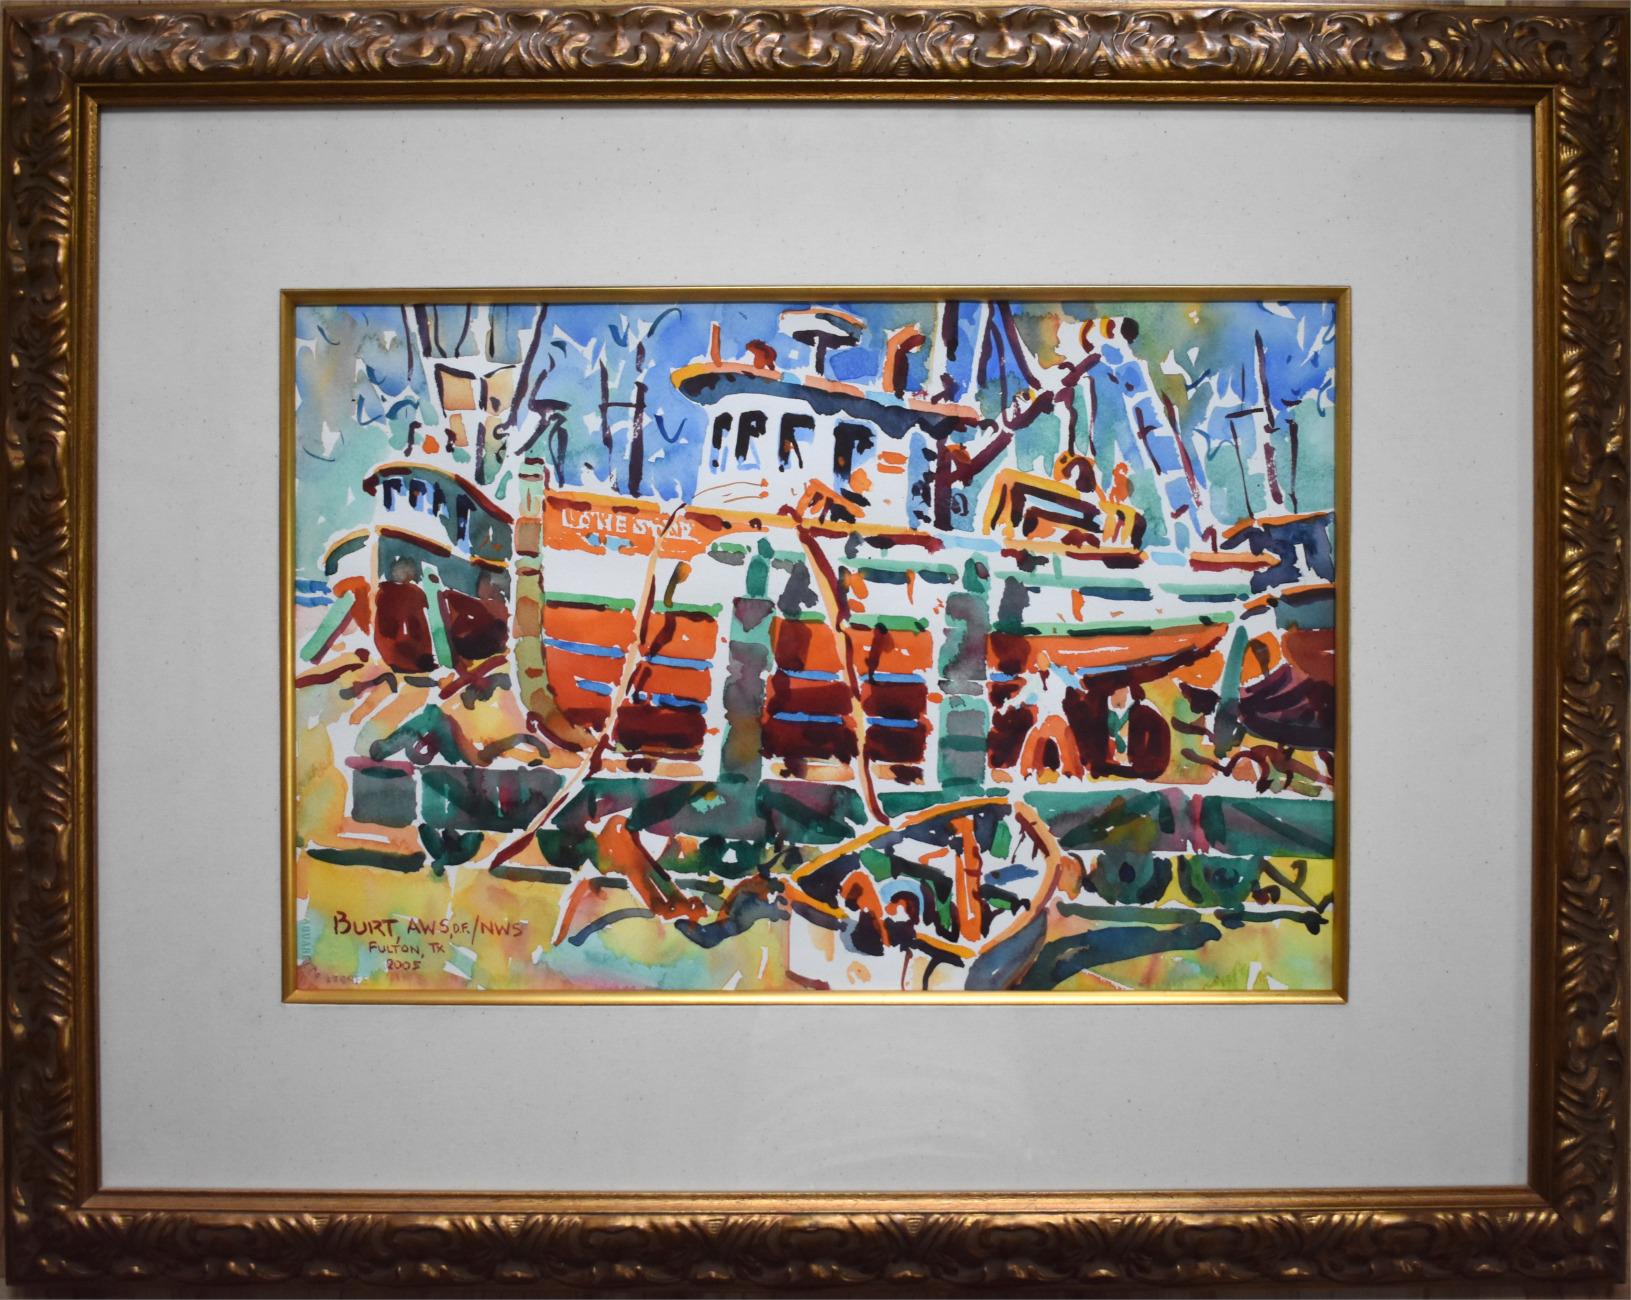 Dan Burt Landscape Art - "Shrimp Boat" TEXAS COAST